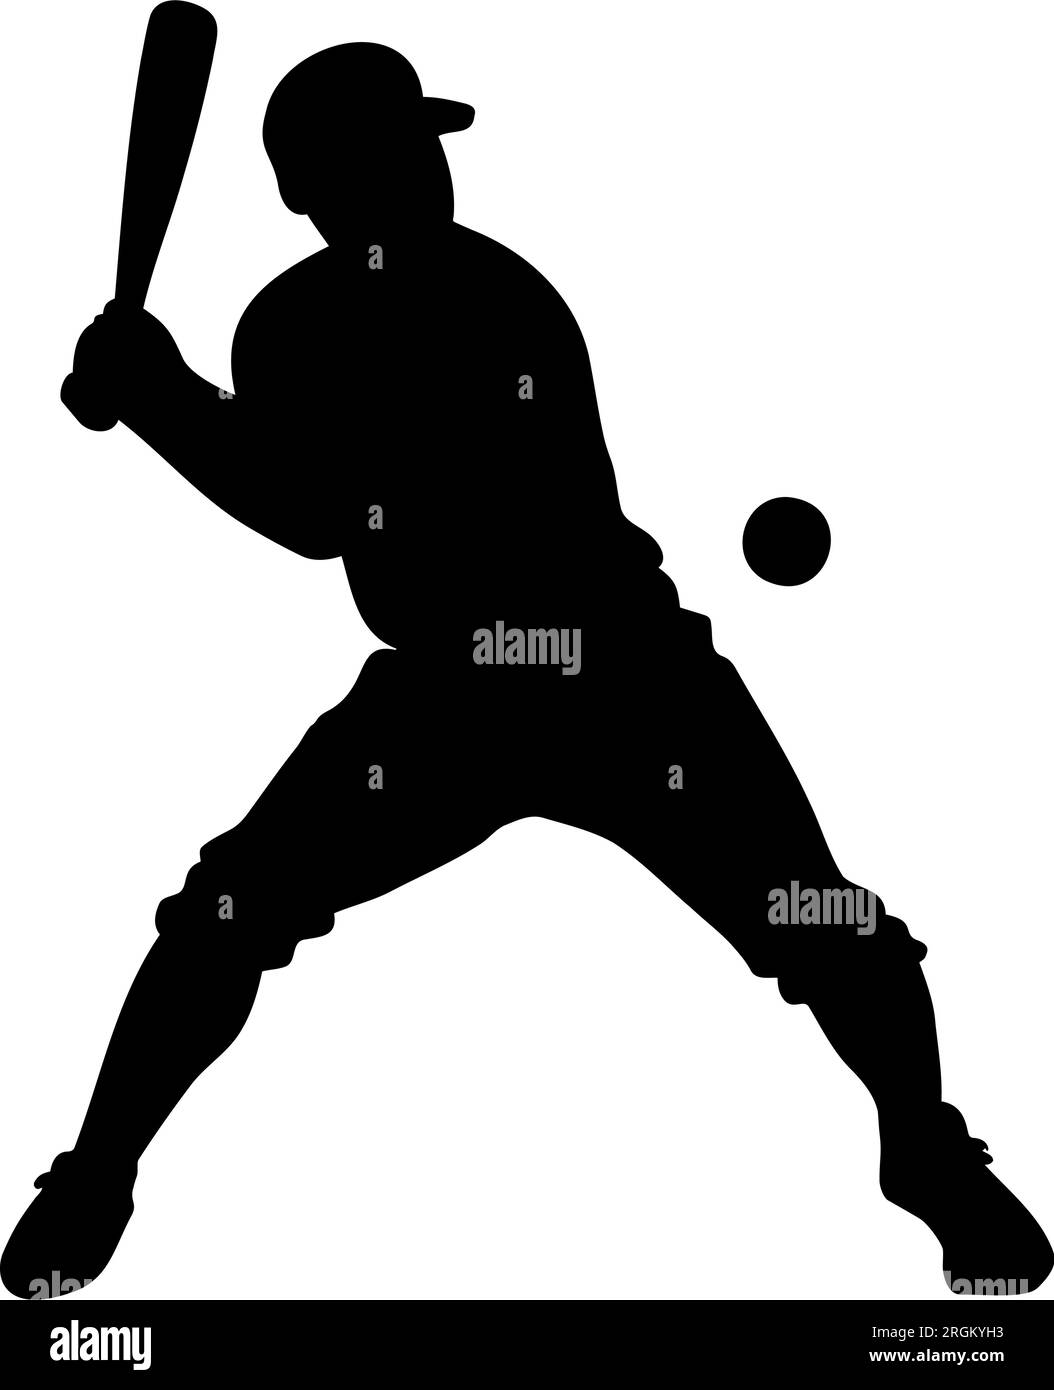 Baseball player hitting Black and White Stock Photos & Images - Alamy